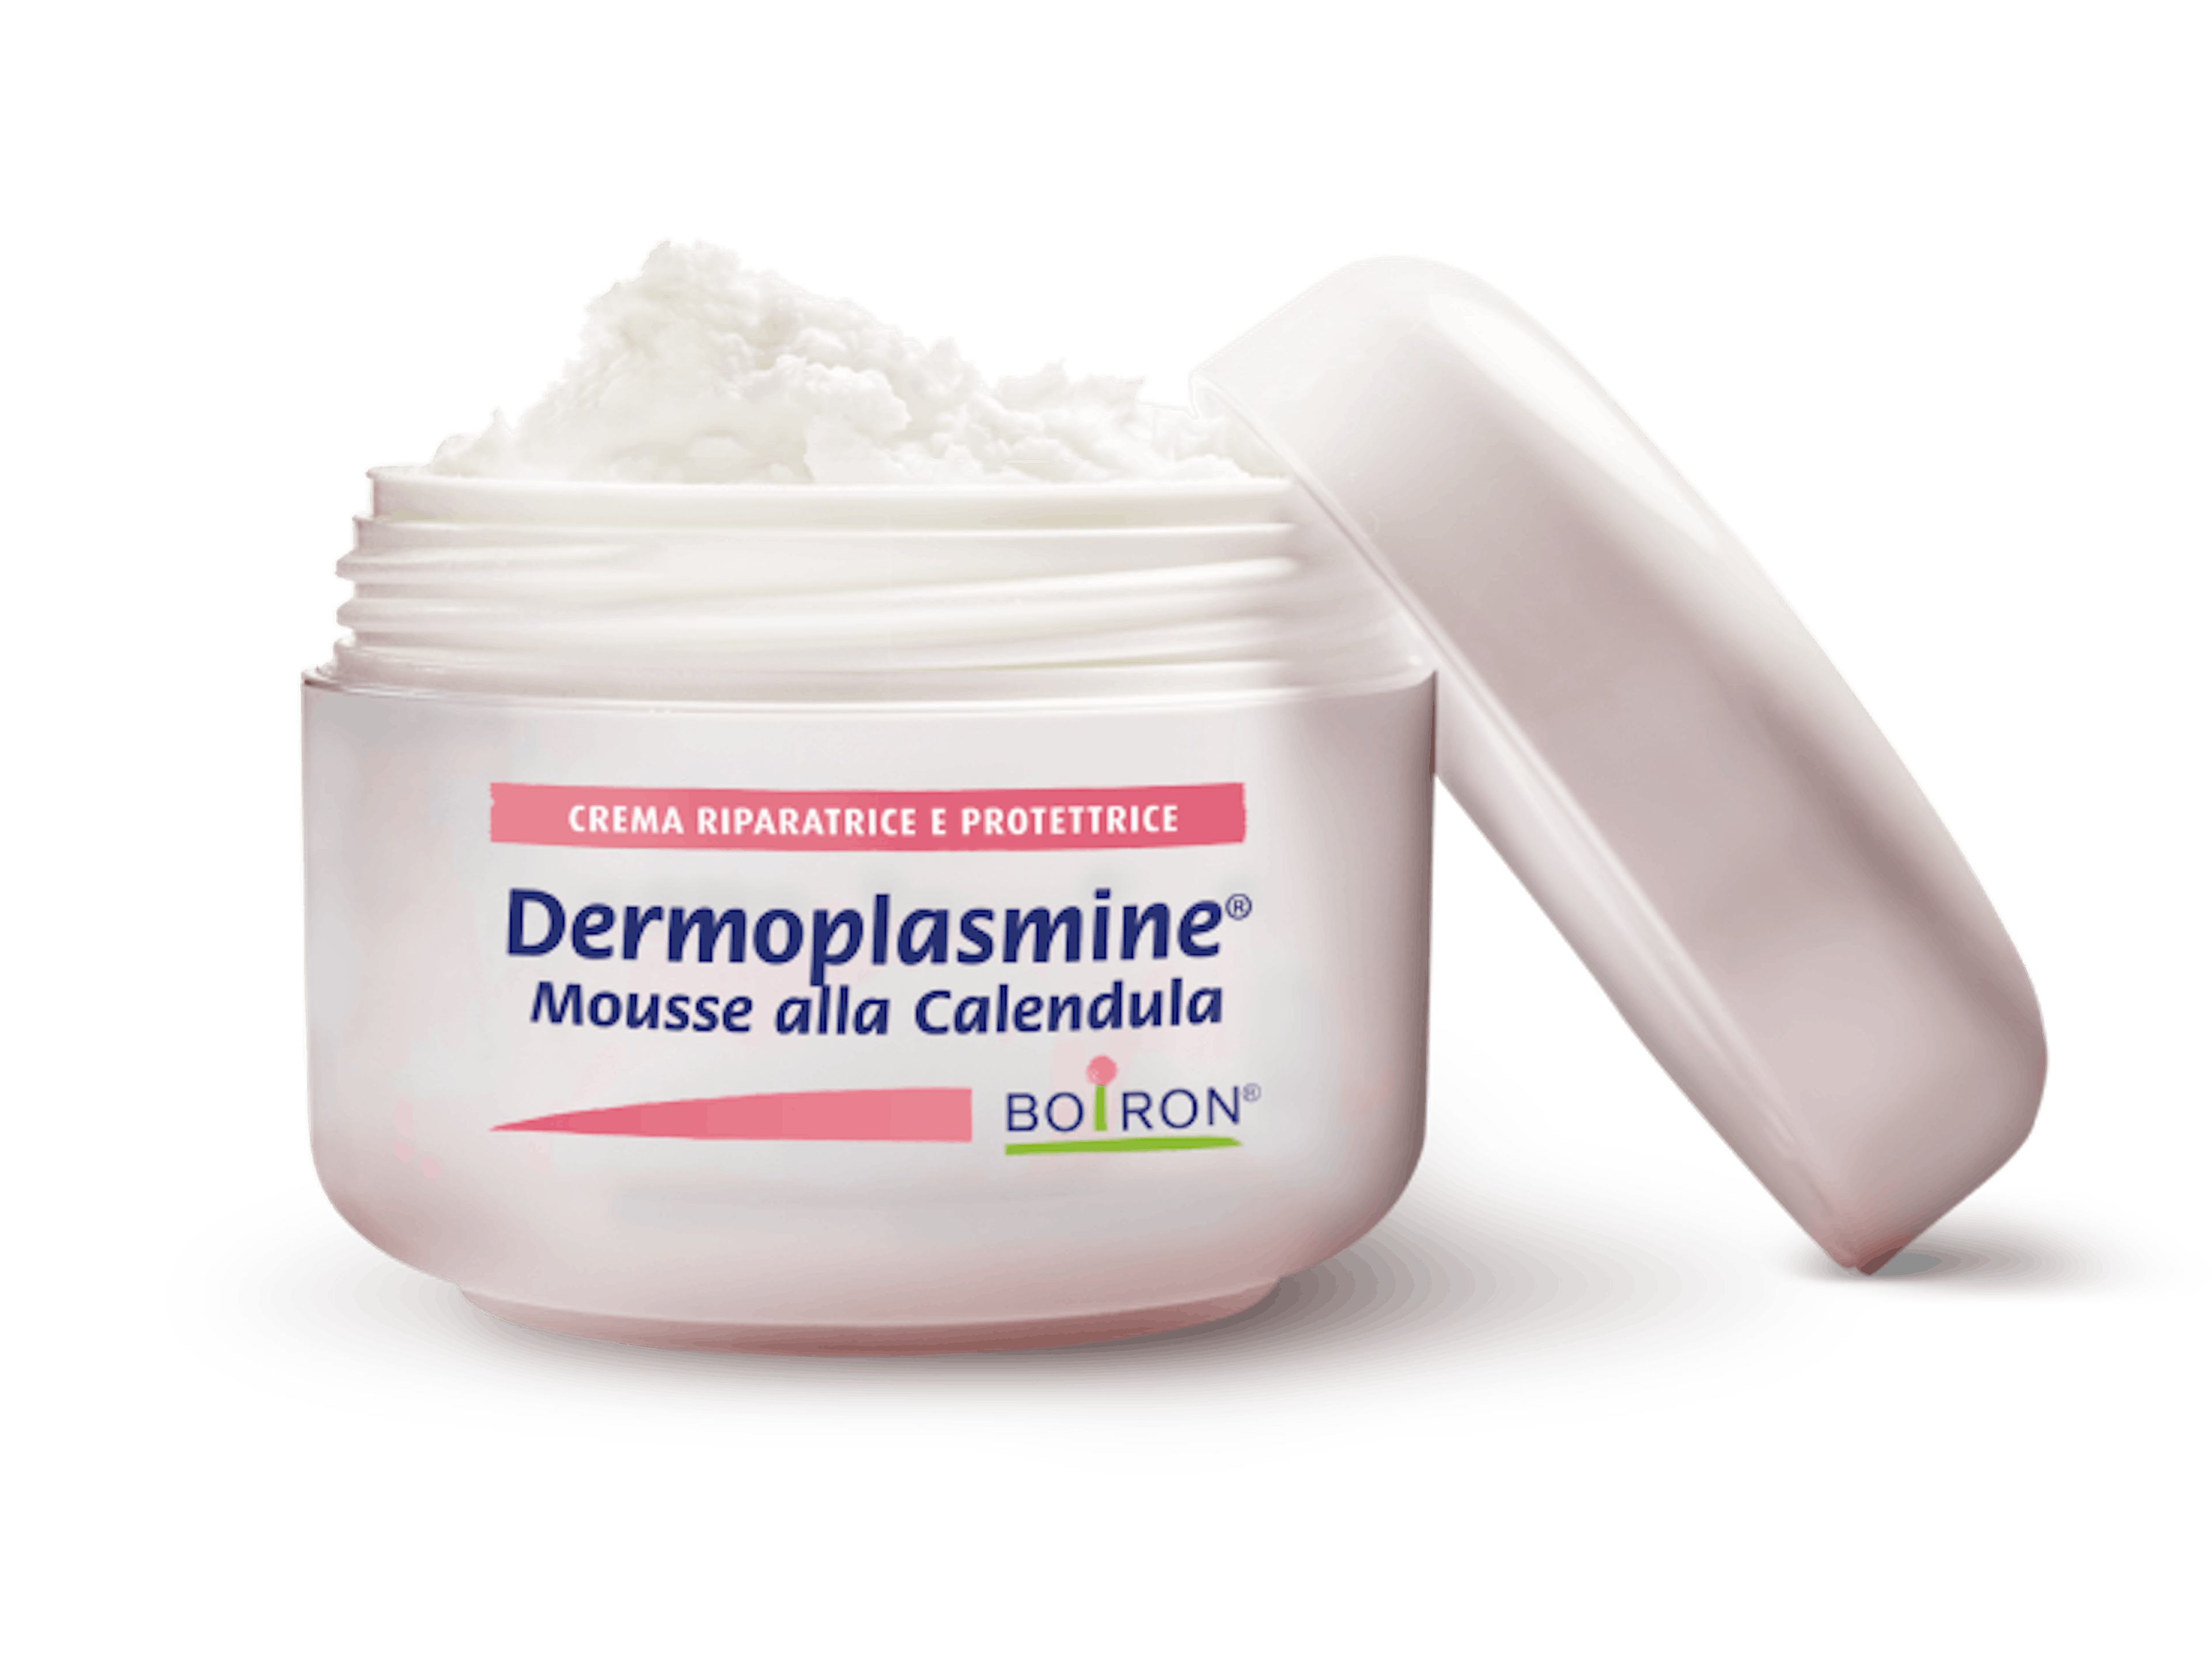 Dermoplasmine Mousse